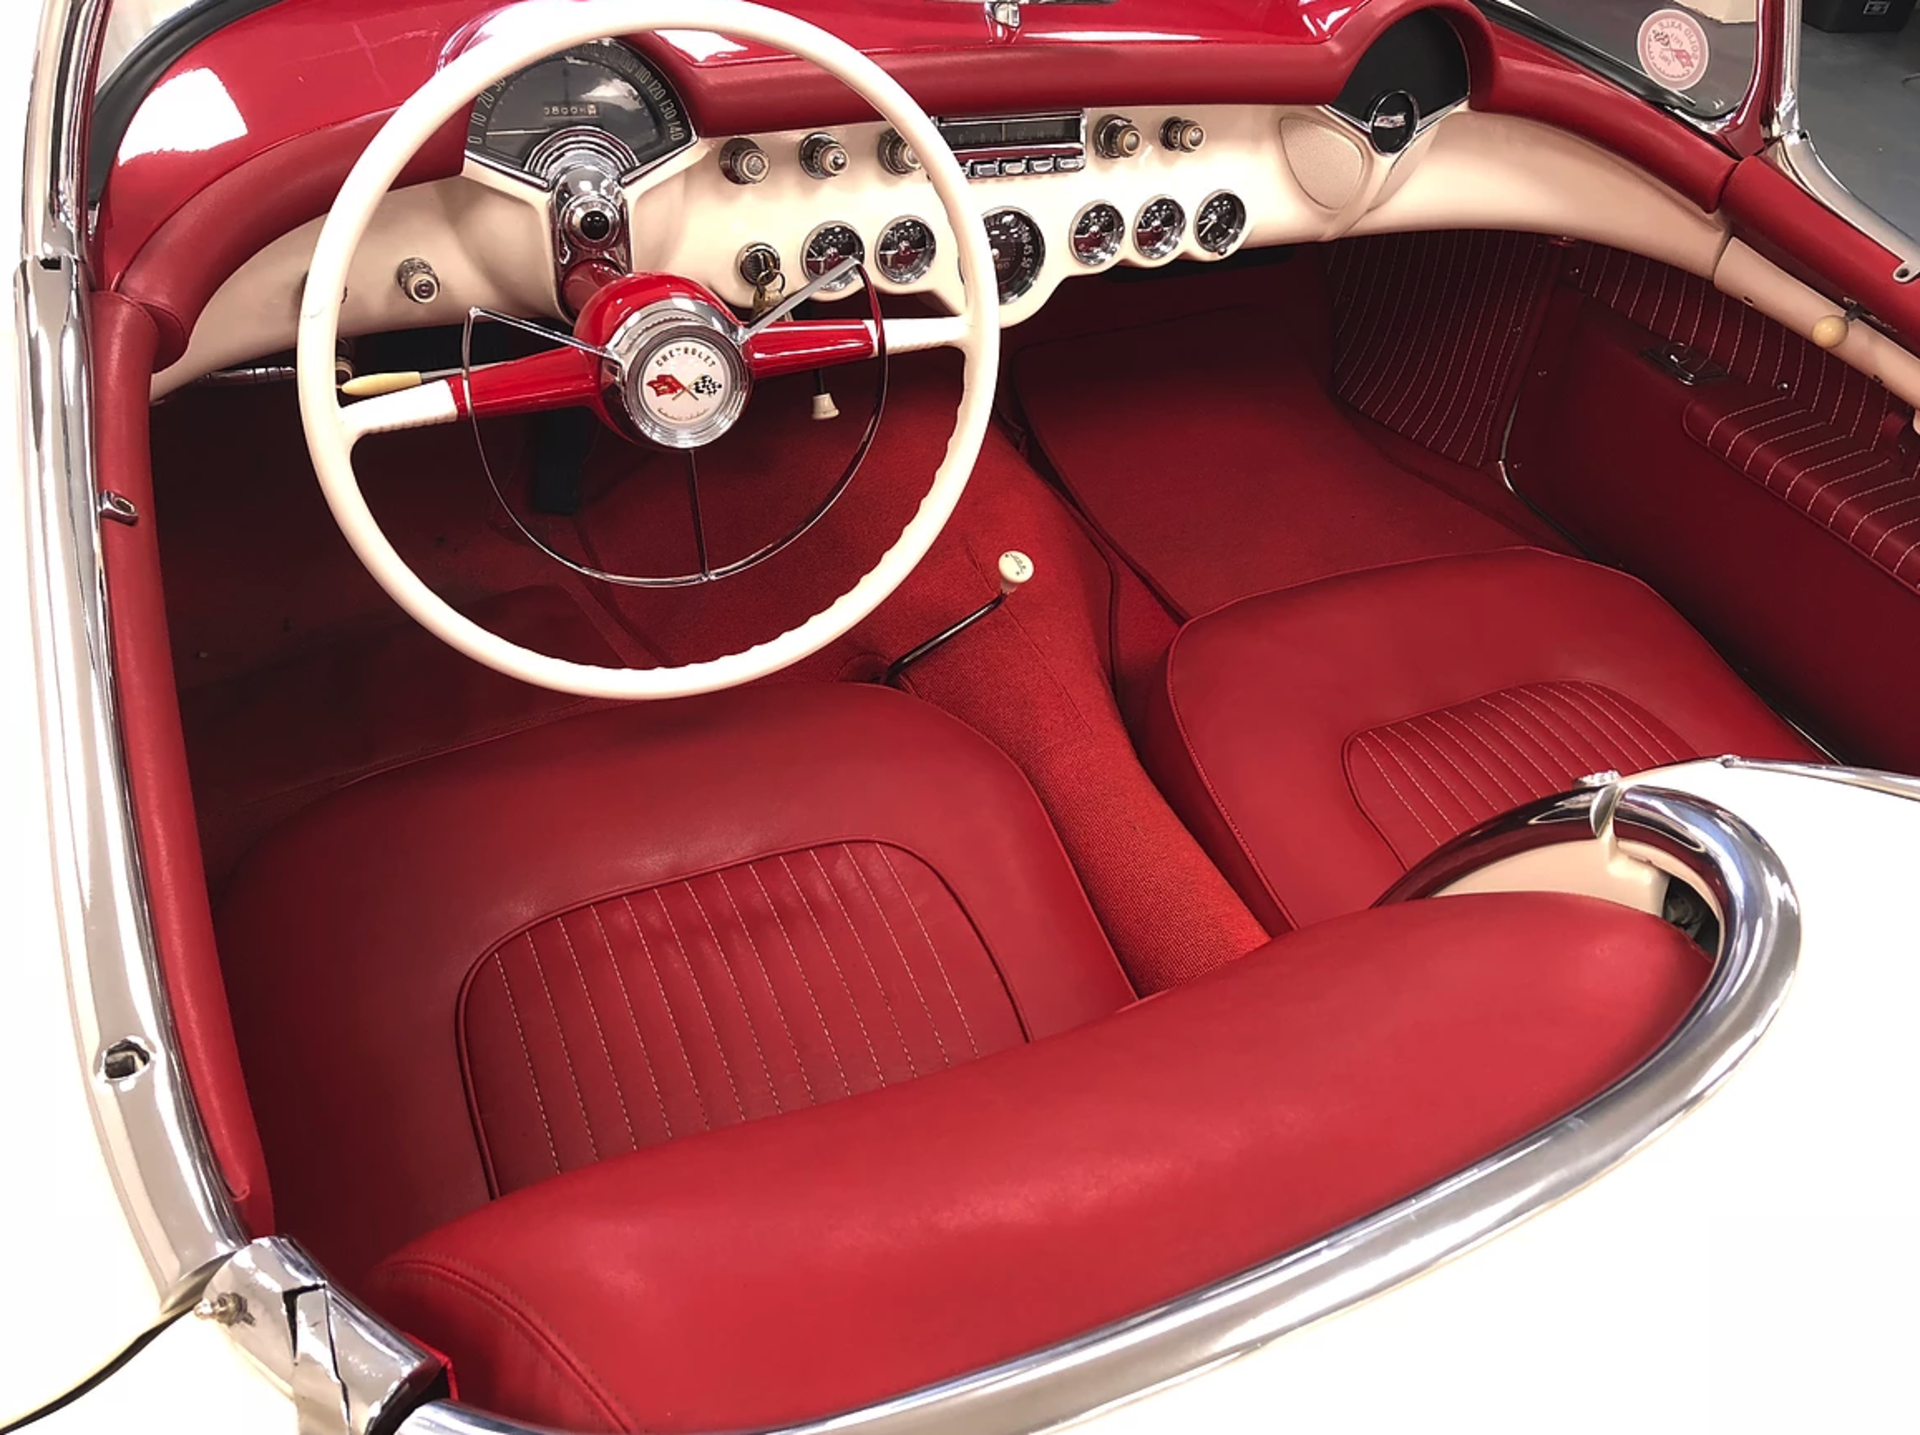 1954 Chevrolet Corvette - America's first true sports car - 13 year restoration - Image 6 of 14